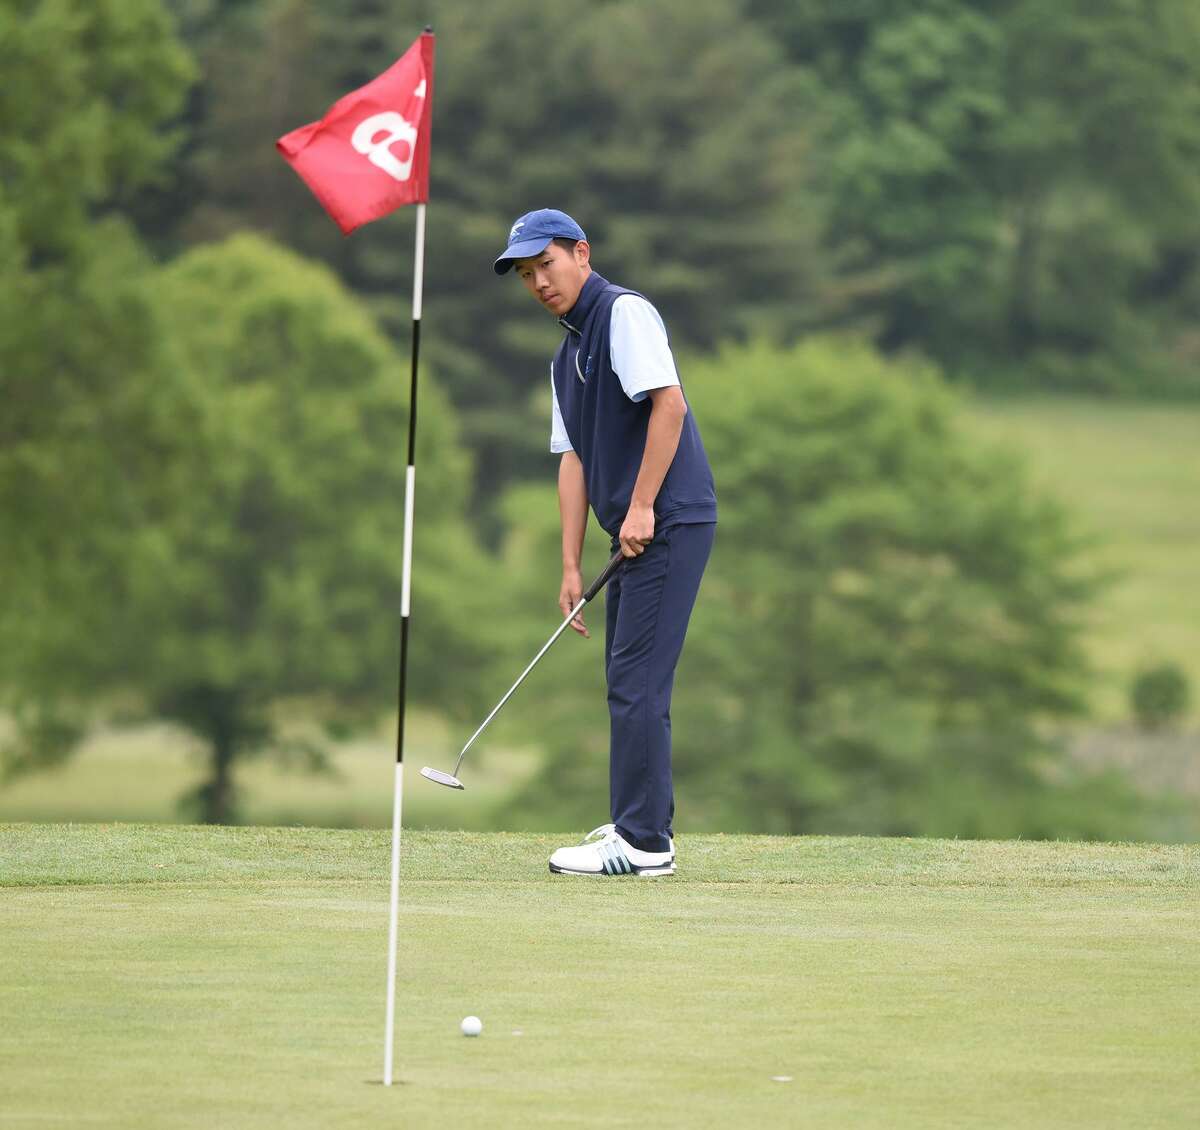 Darien’s Alex Gu putts on the 18th green during the FCIAC boys golf championship at Fairchild Wheeler Golf Course in Fairfield on Thursday.